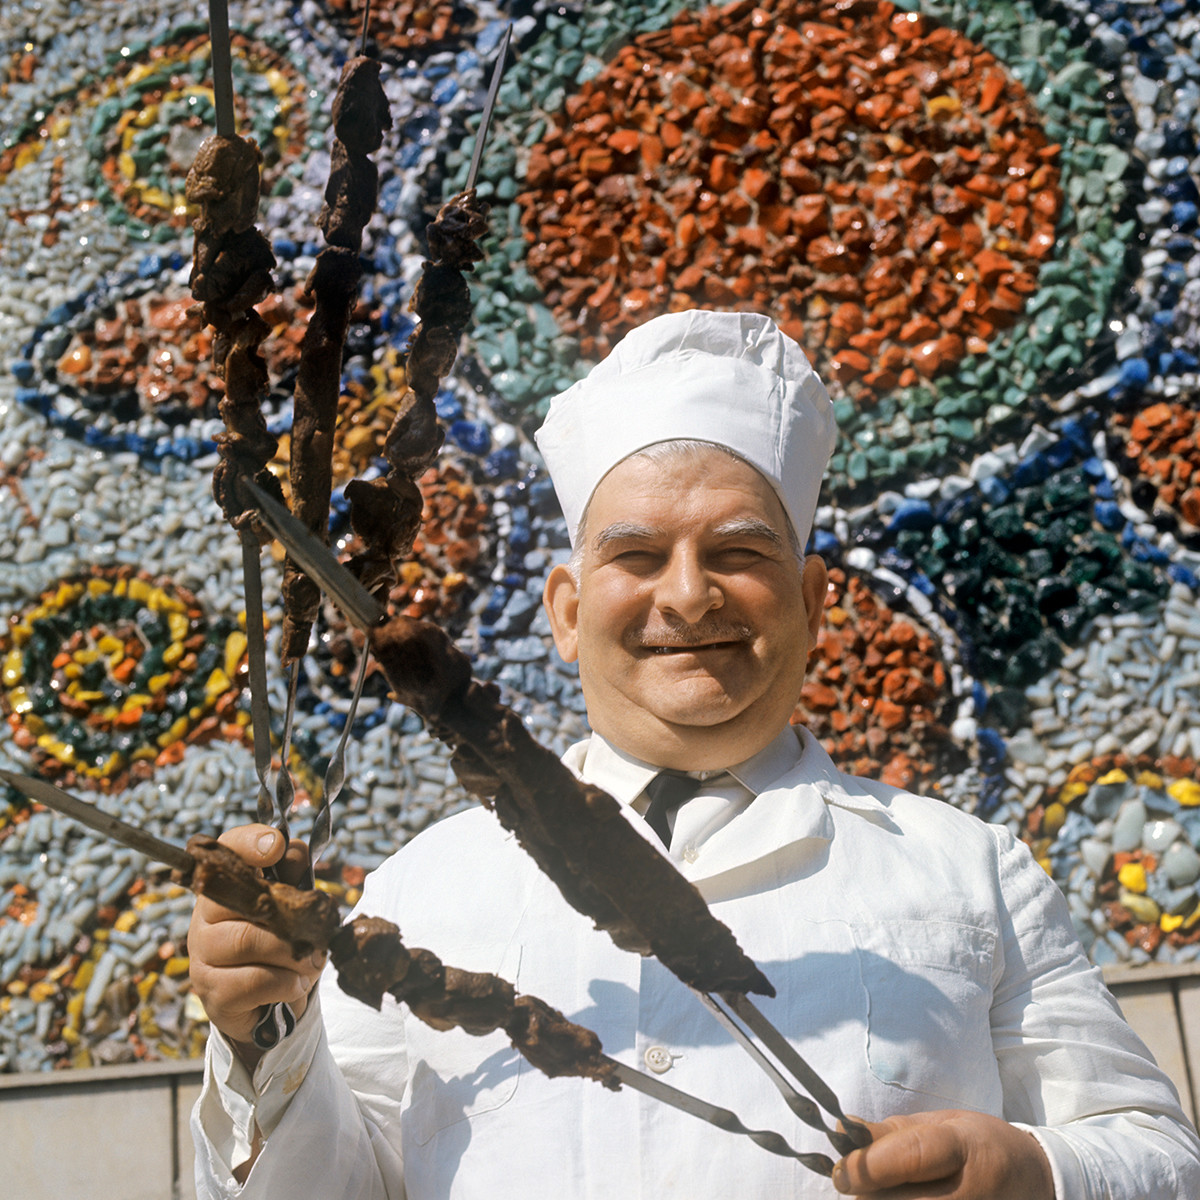 Un cuoco con in mano degli shashlyk, Repubblica Socialista Sovietica Georgiana, 1971
